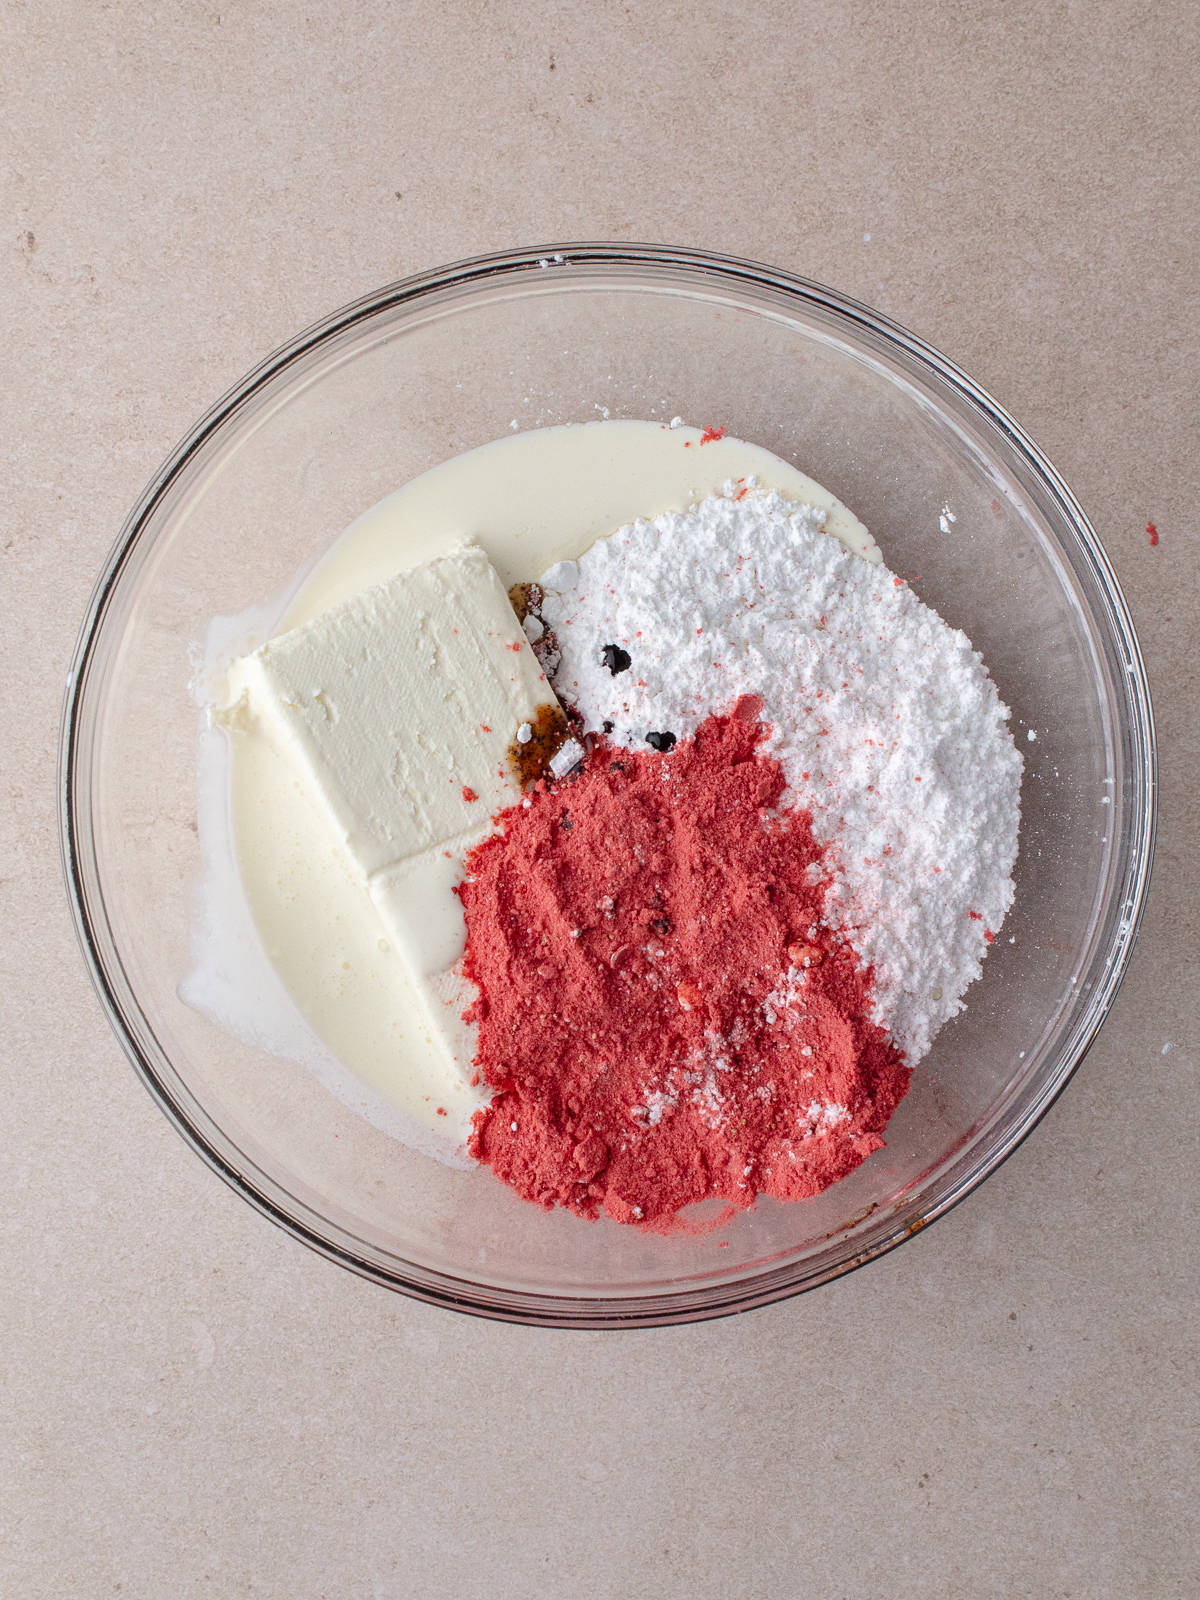 Strawberry cheesecake filling ingredients in medium bowl